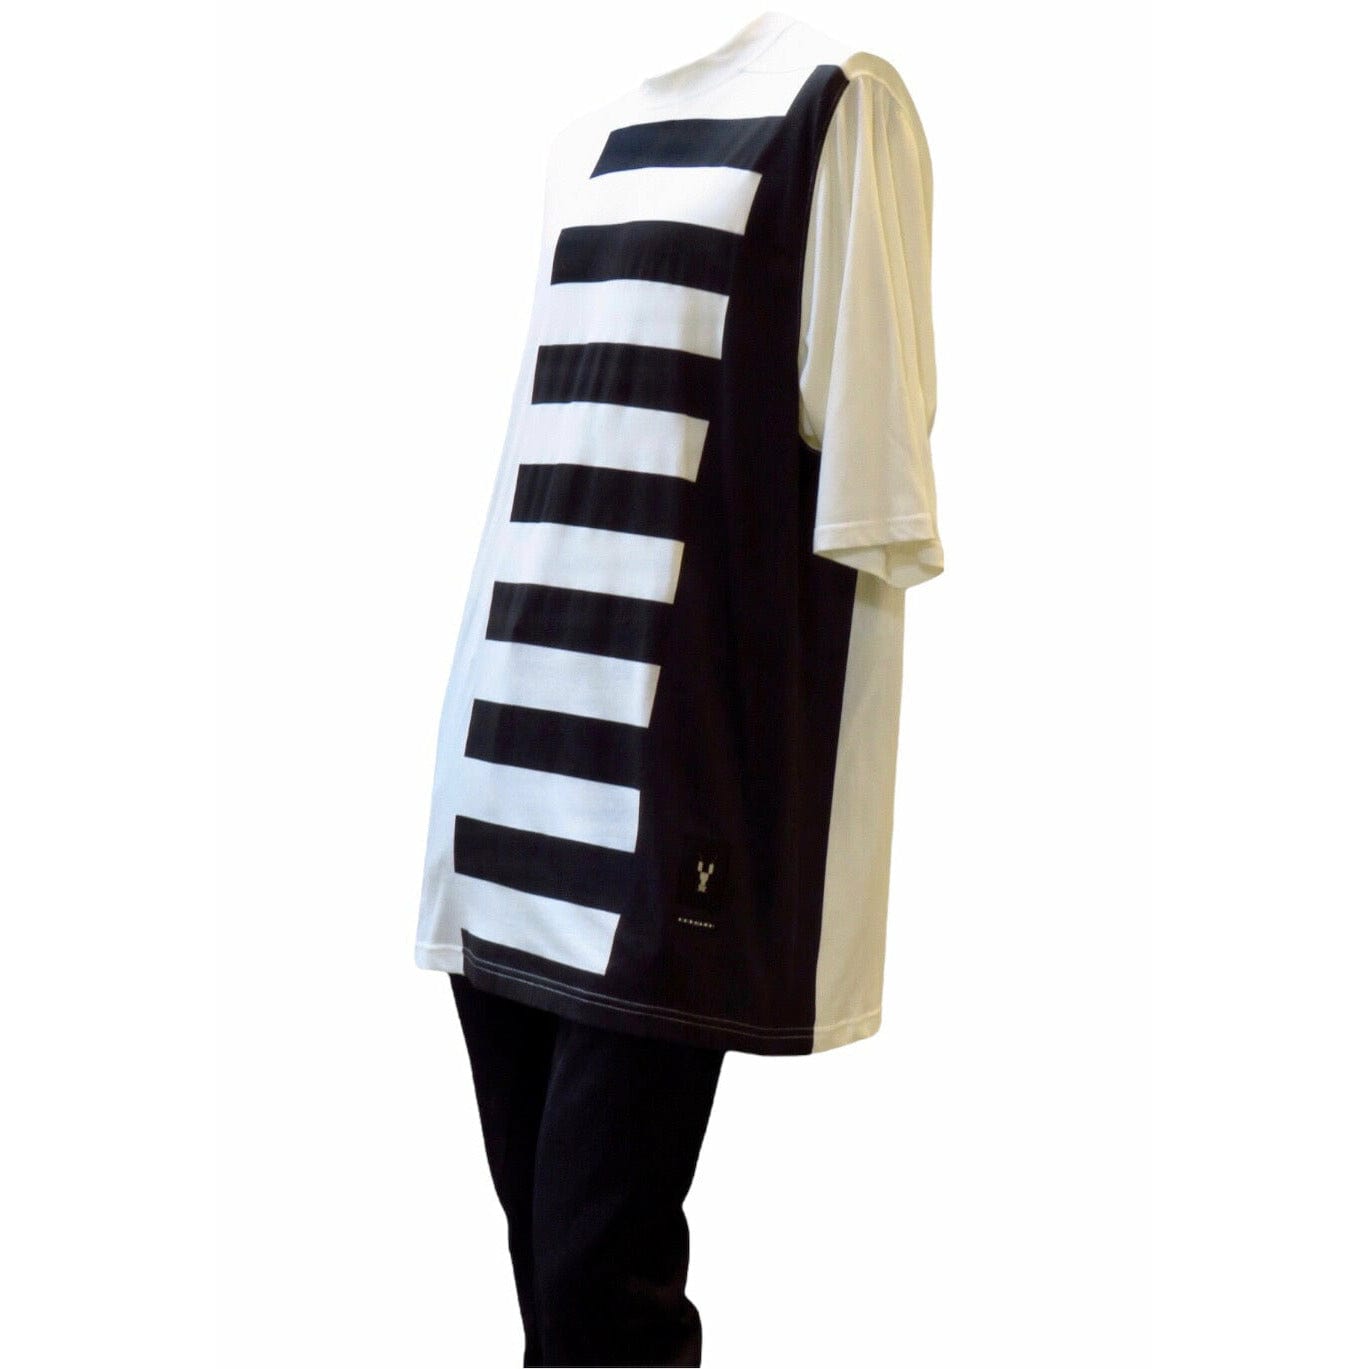 striped-panel-t-shirt Mens Top Black